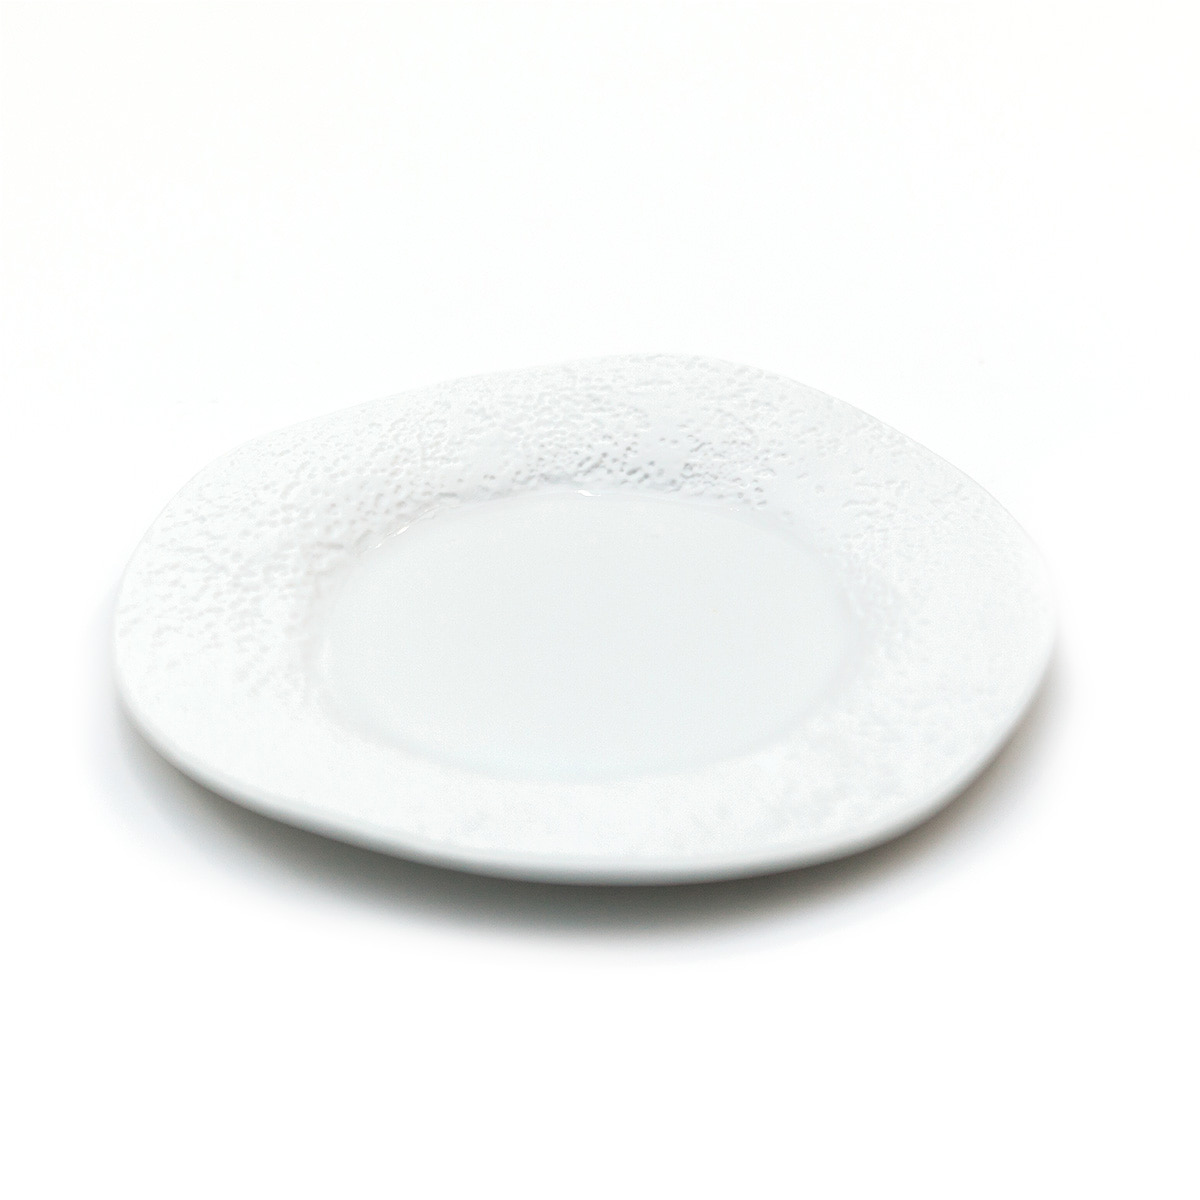 PORDAMSATaffoni Plate 포르담사 타포니 플레이트 (Ø14)MADE IN SPAIN